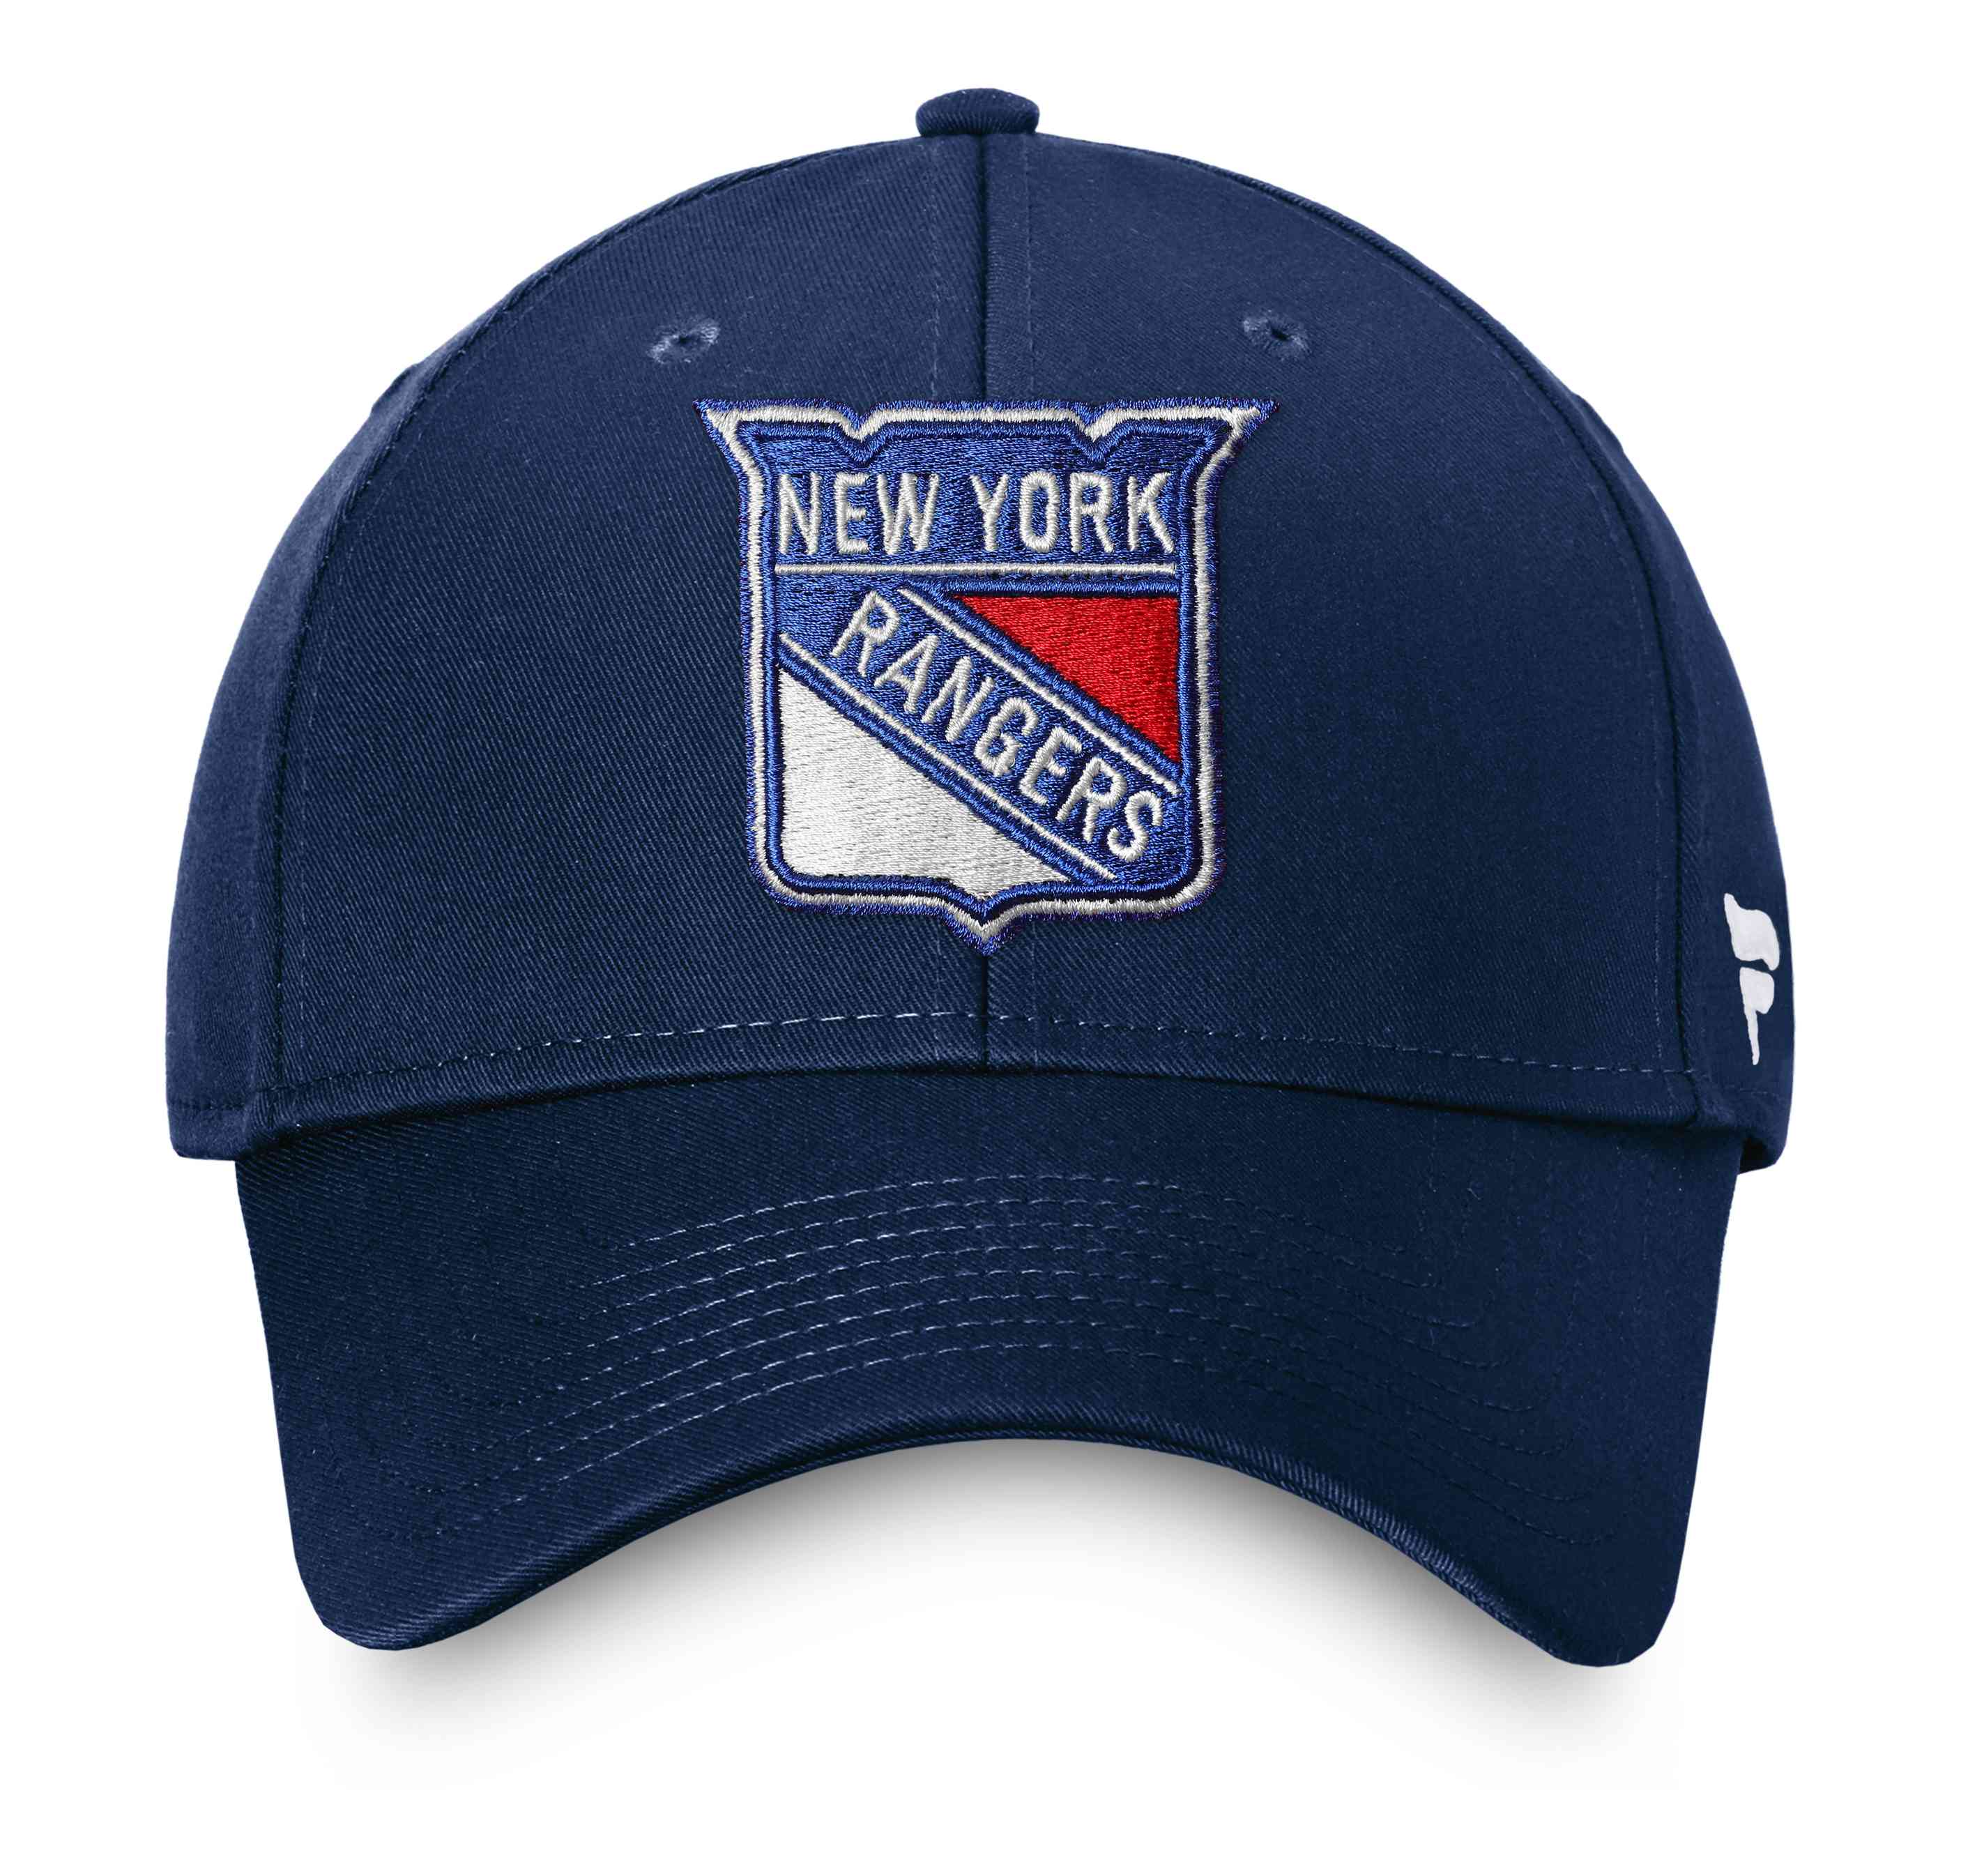 Fanatics - NHL New York Rangers Core Structured Adjustable Strapback Cap